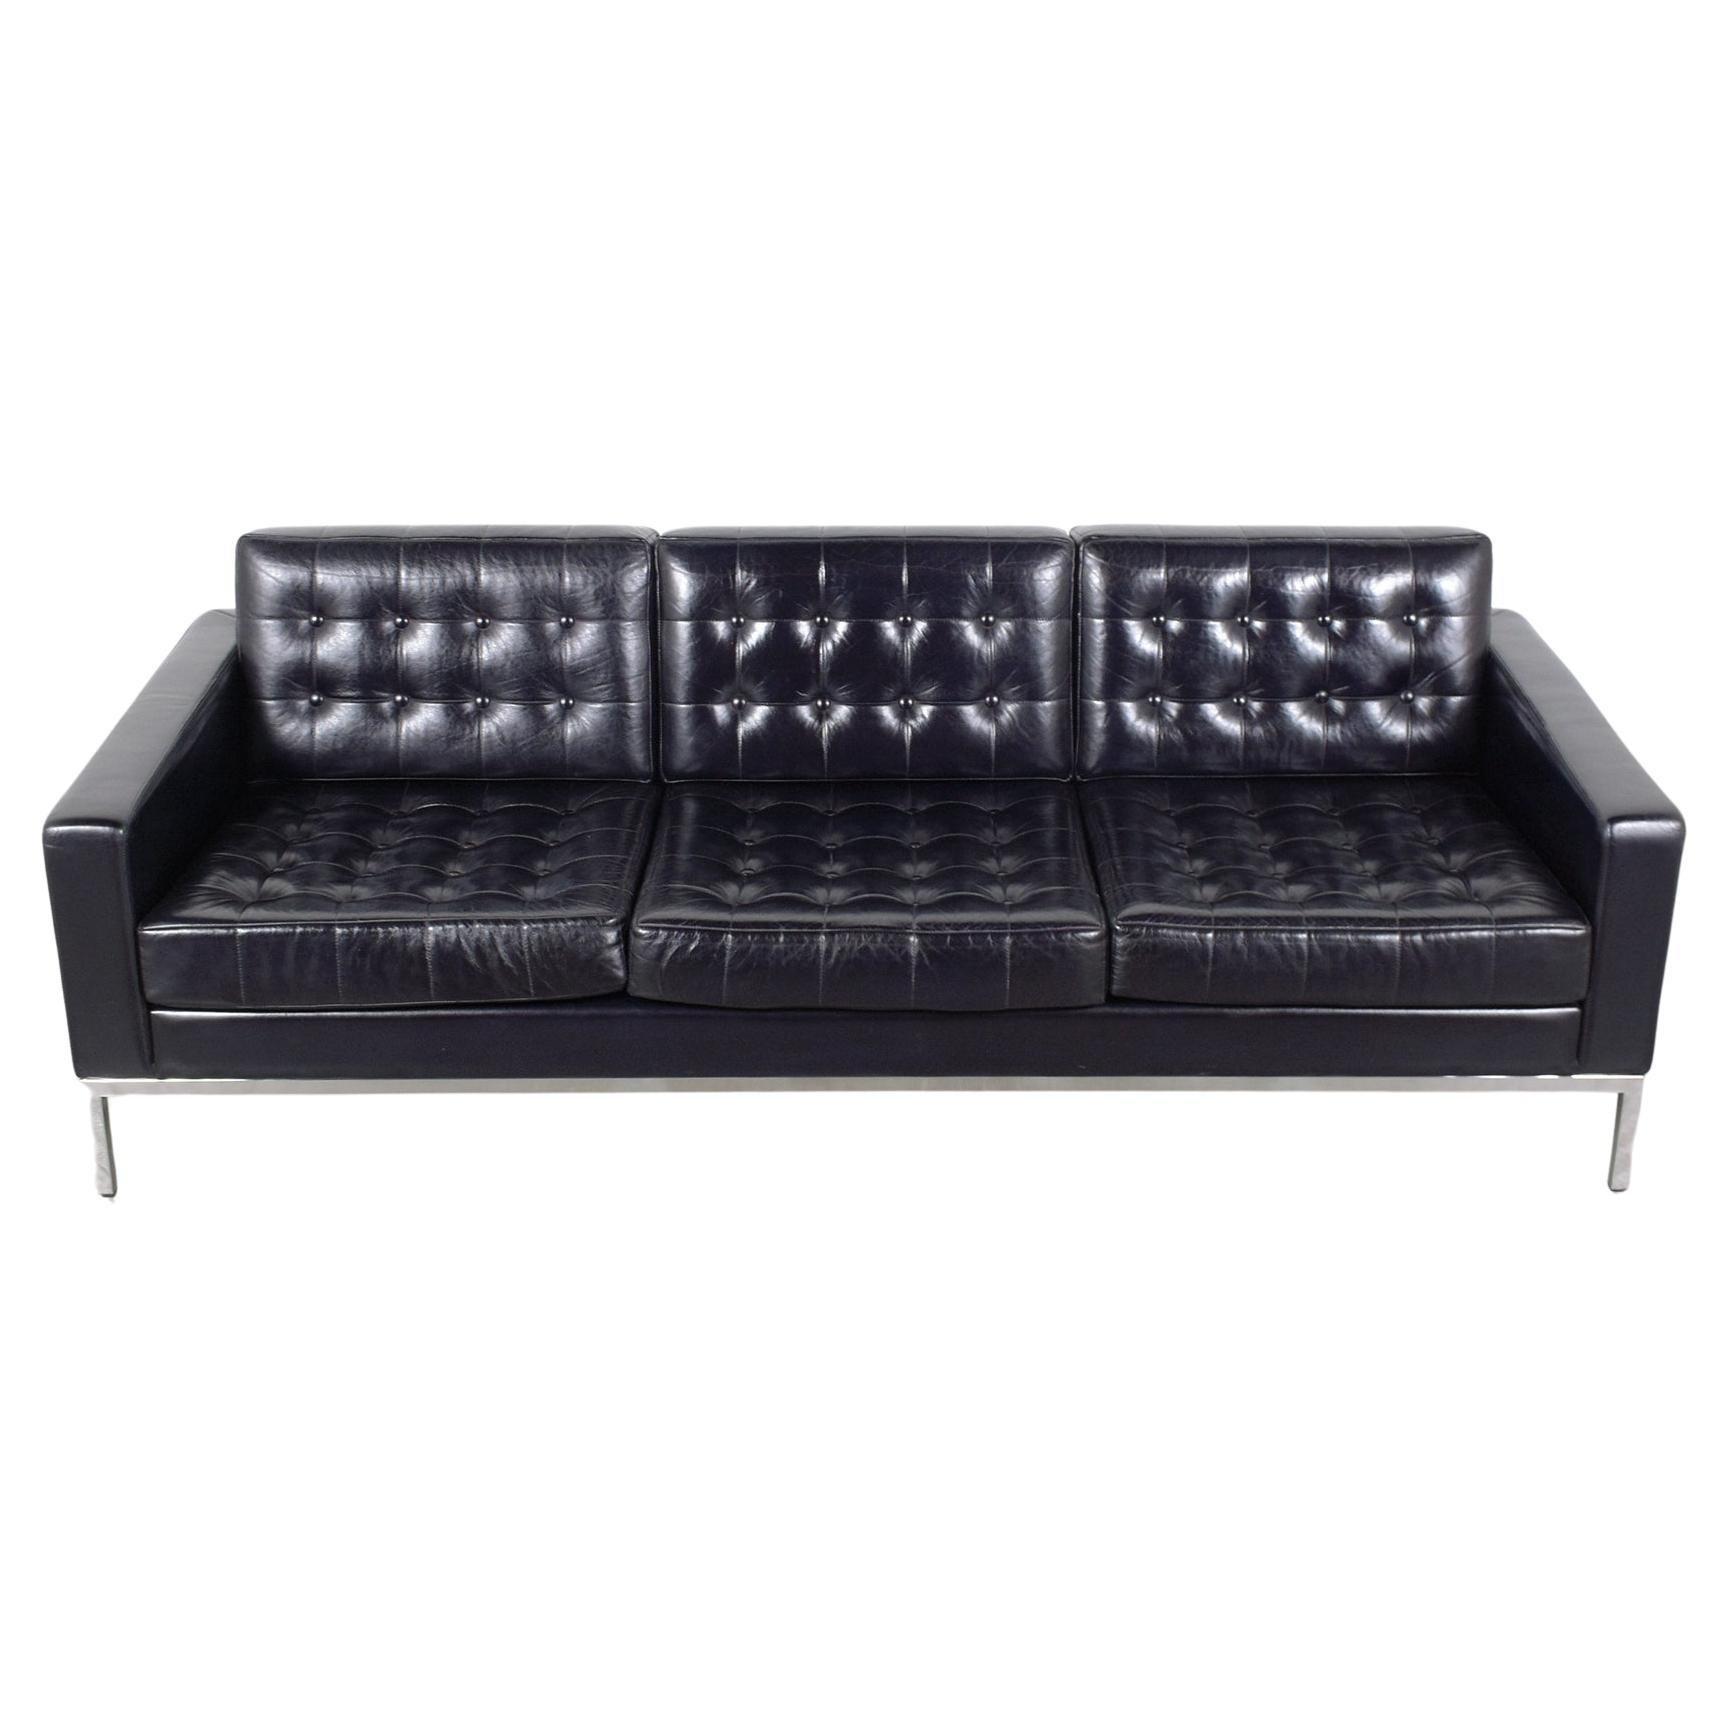 1980s Vintage Leather Sofa: Timeless Mid-Century Elegance Restored